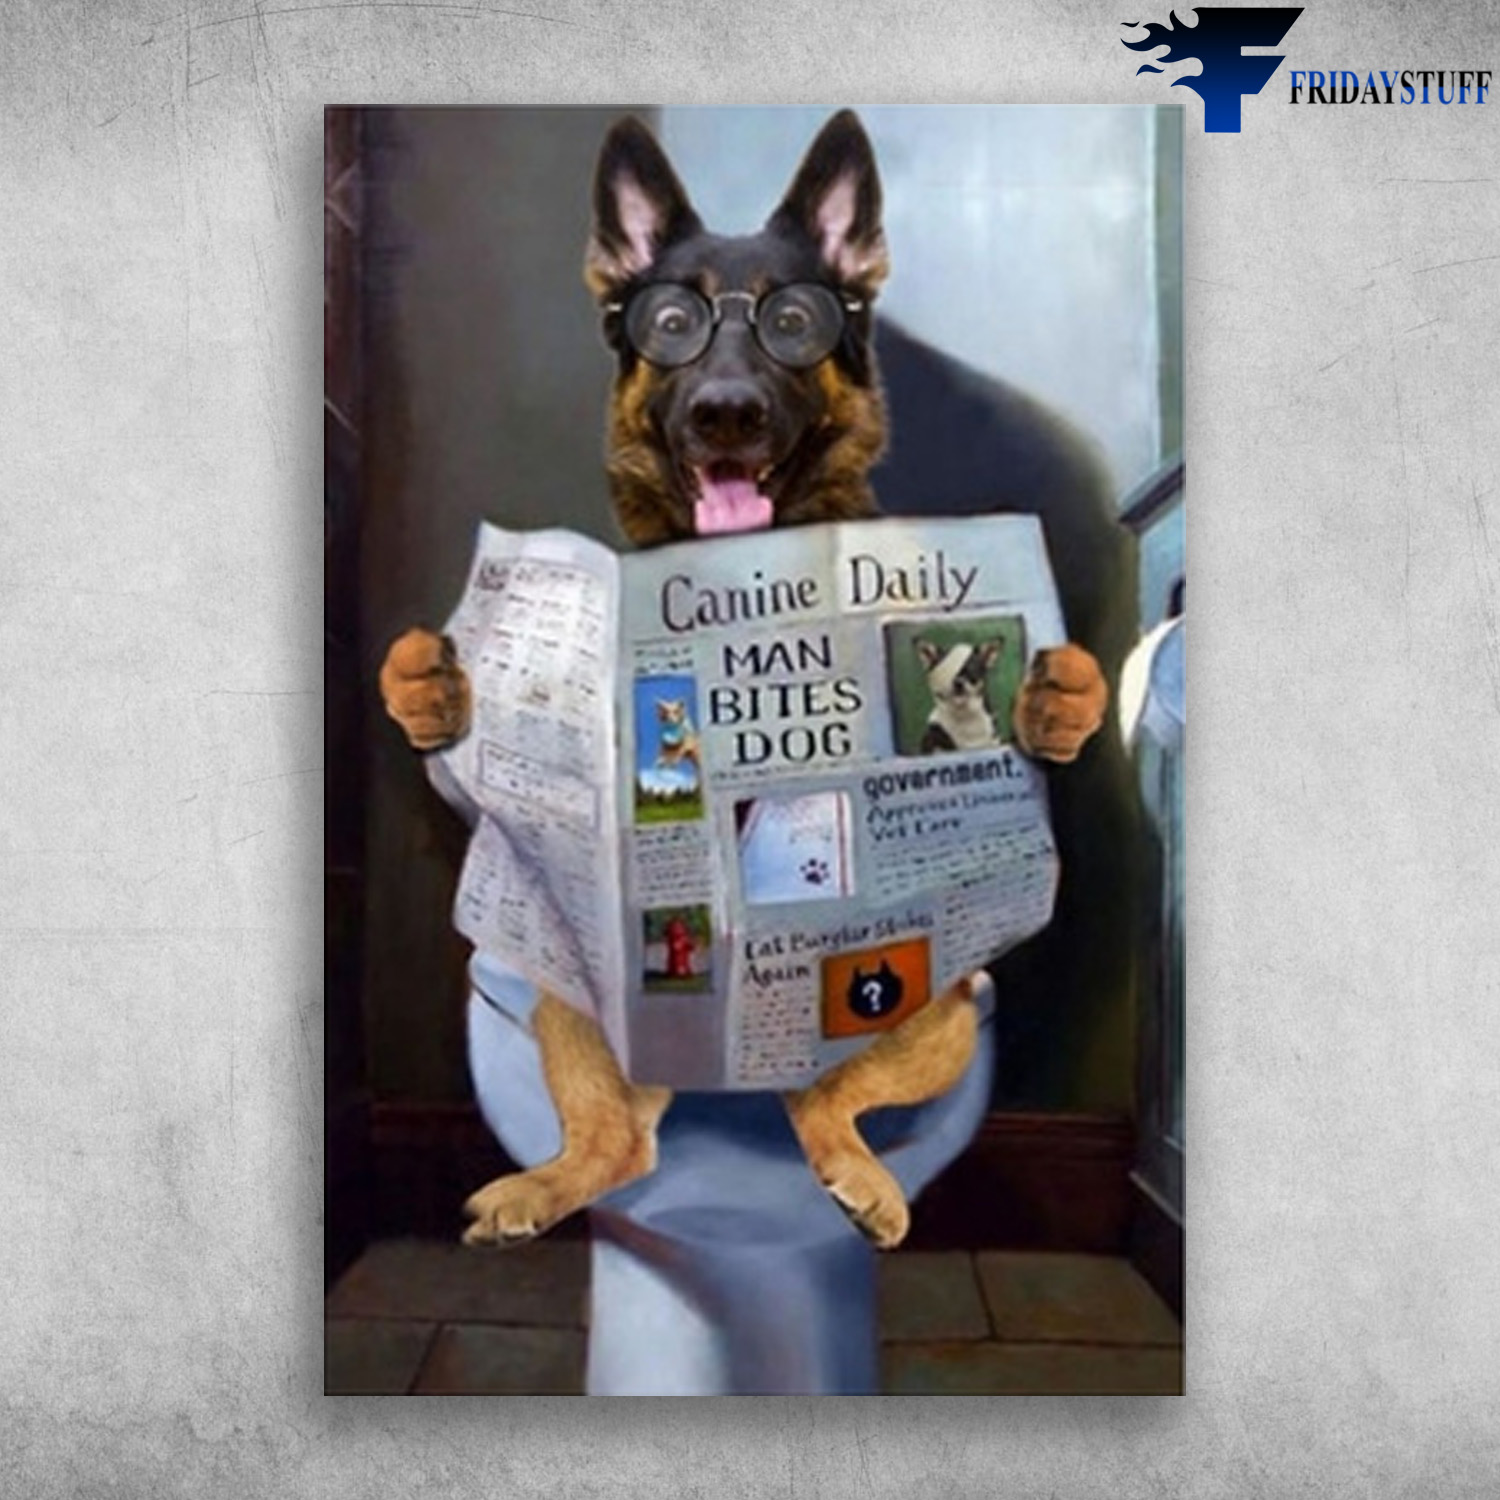 German Shepherd In Toilet - Reading News, Canine Daily, Man Bites Dog